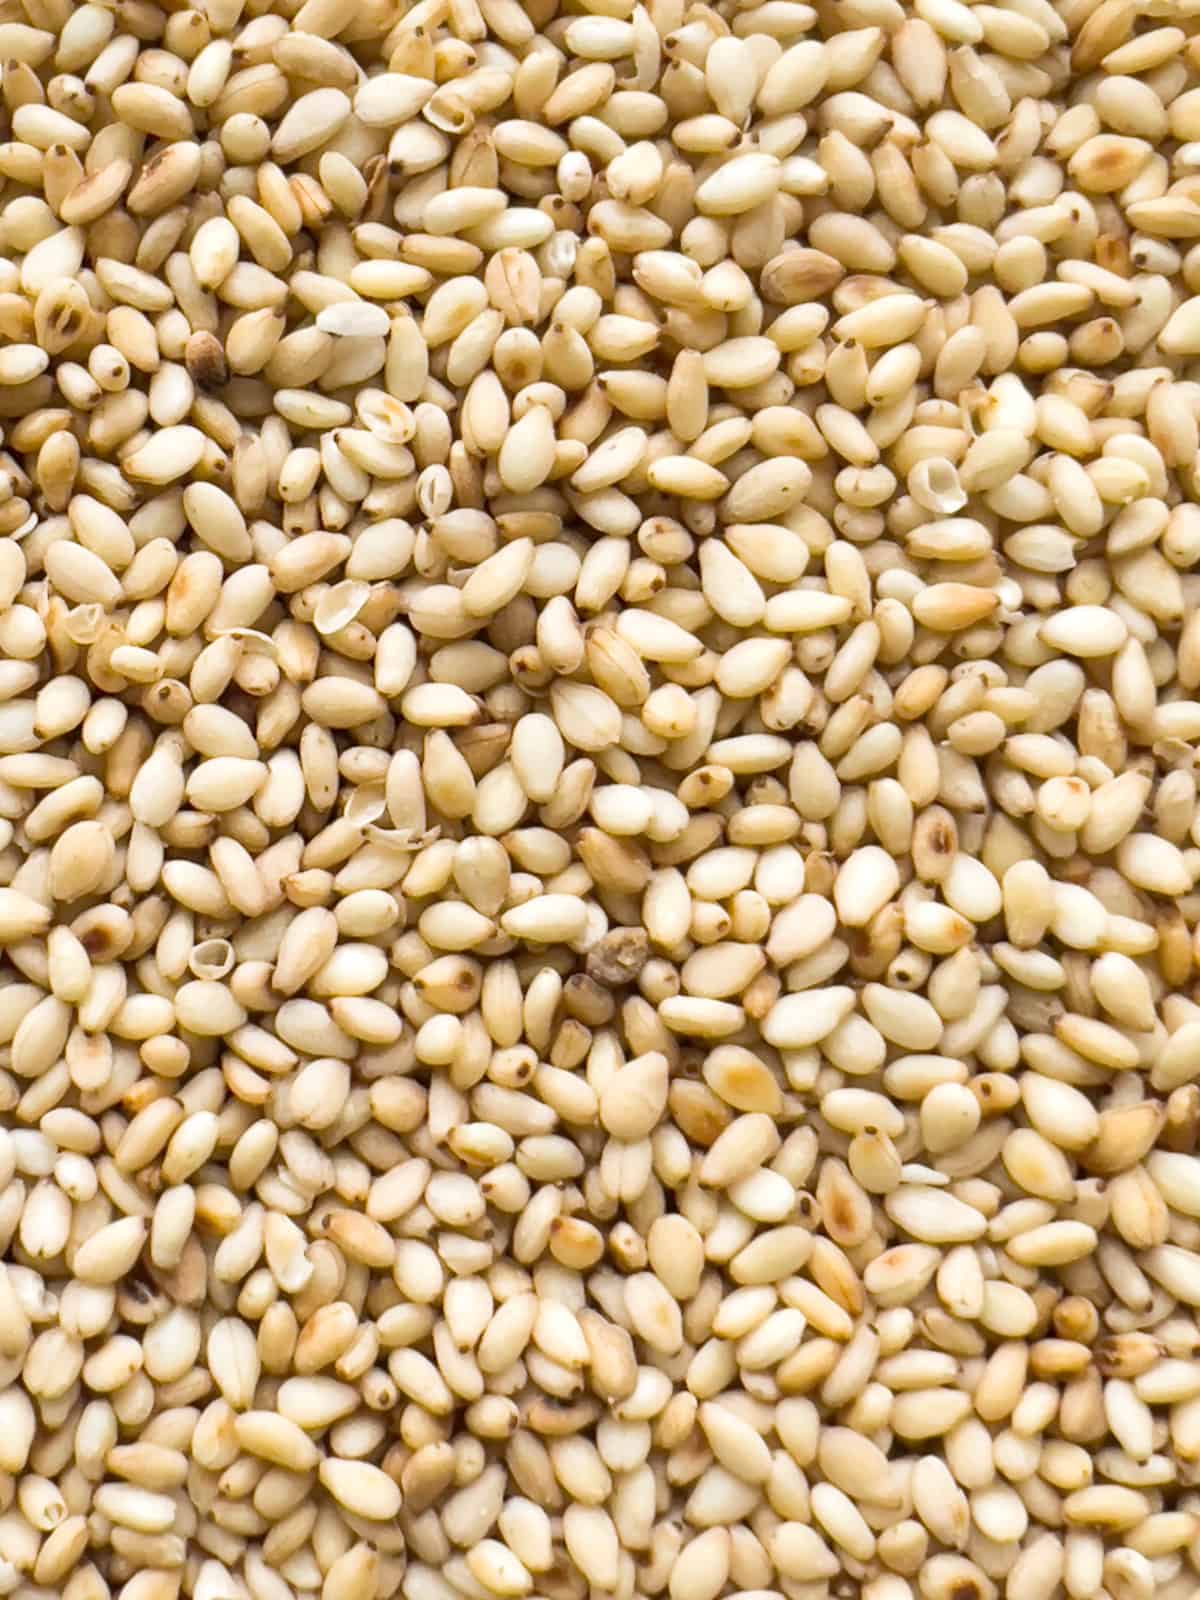 A close up image of white Japanese roasted sesame seeds.